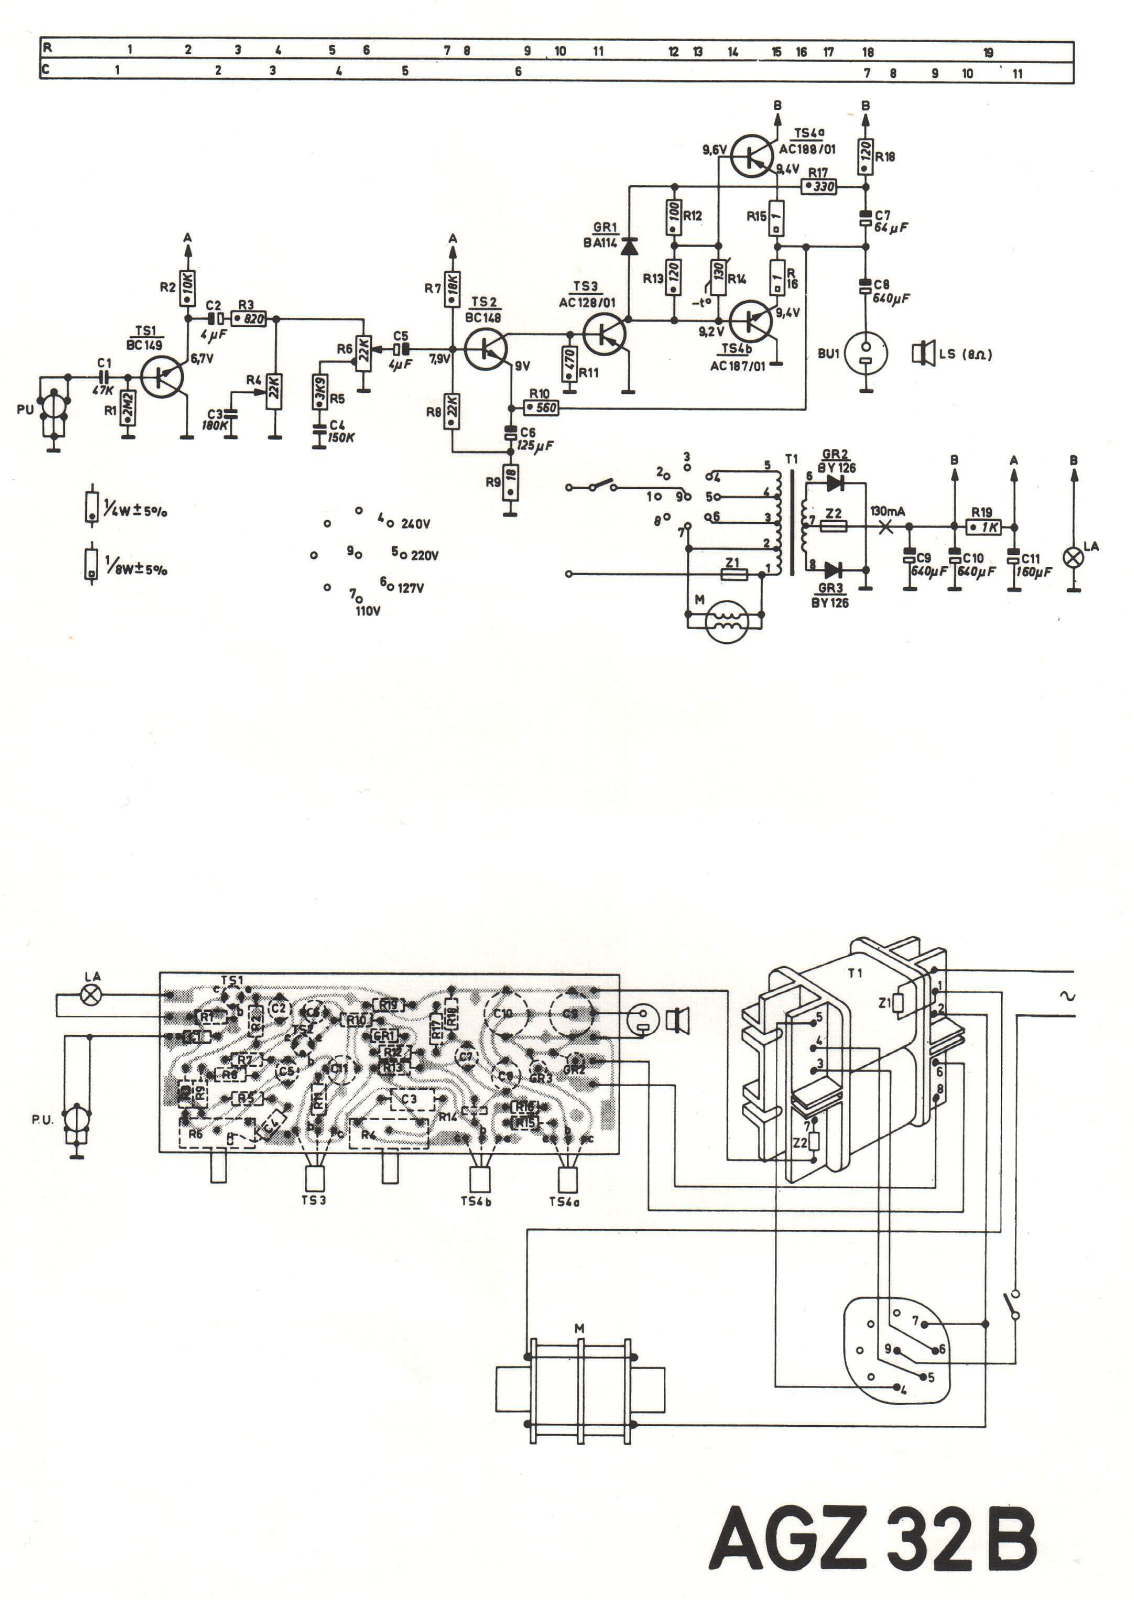 Philips AGZ32b Schematic